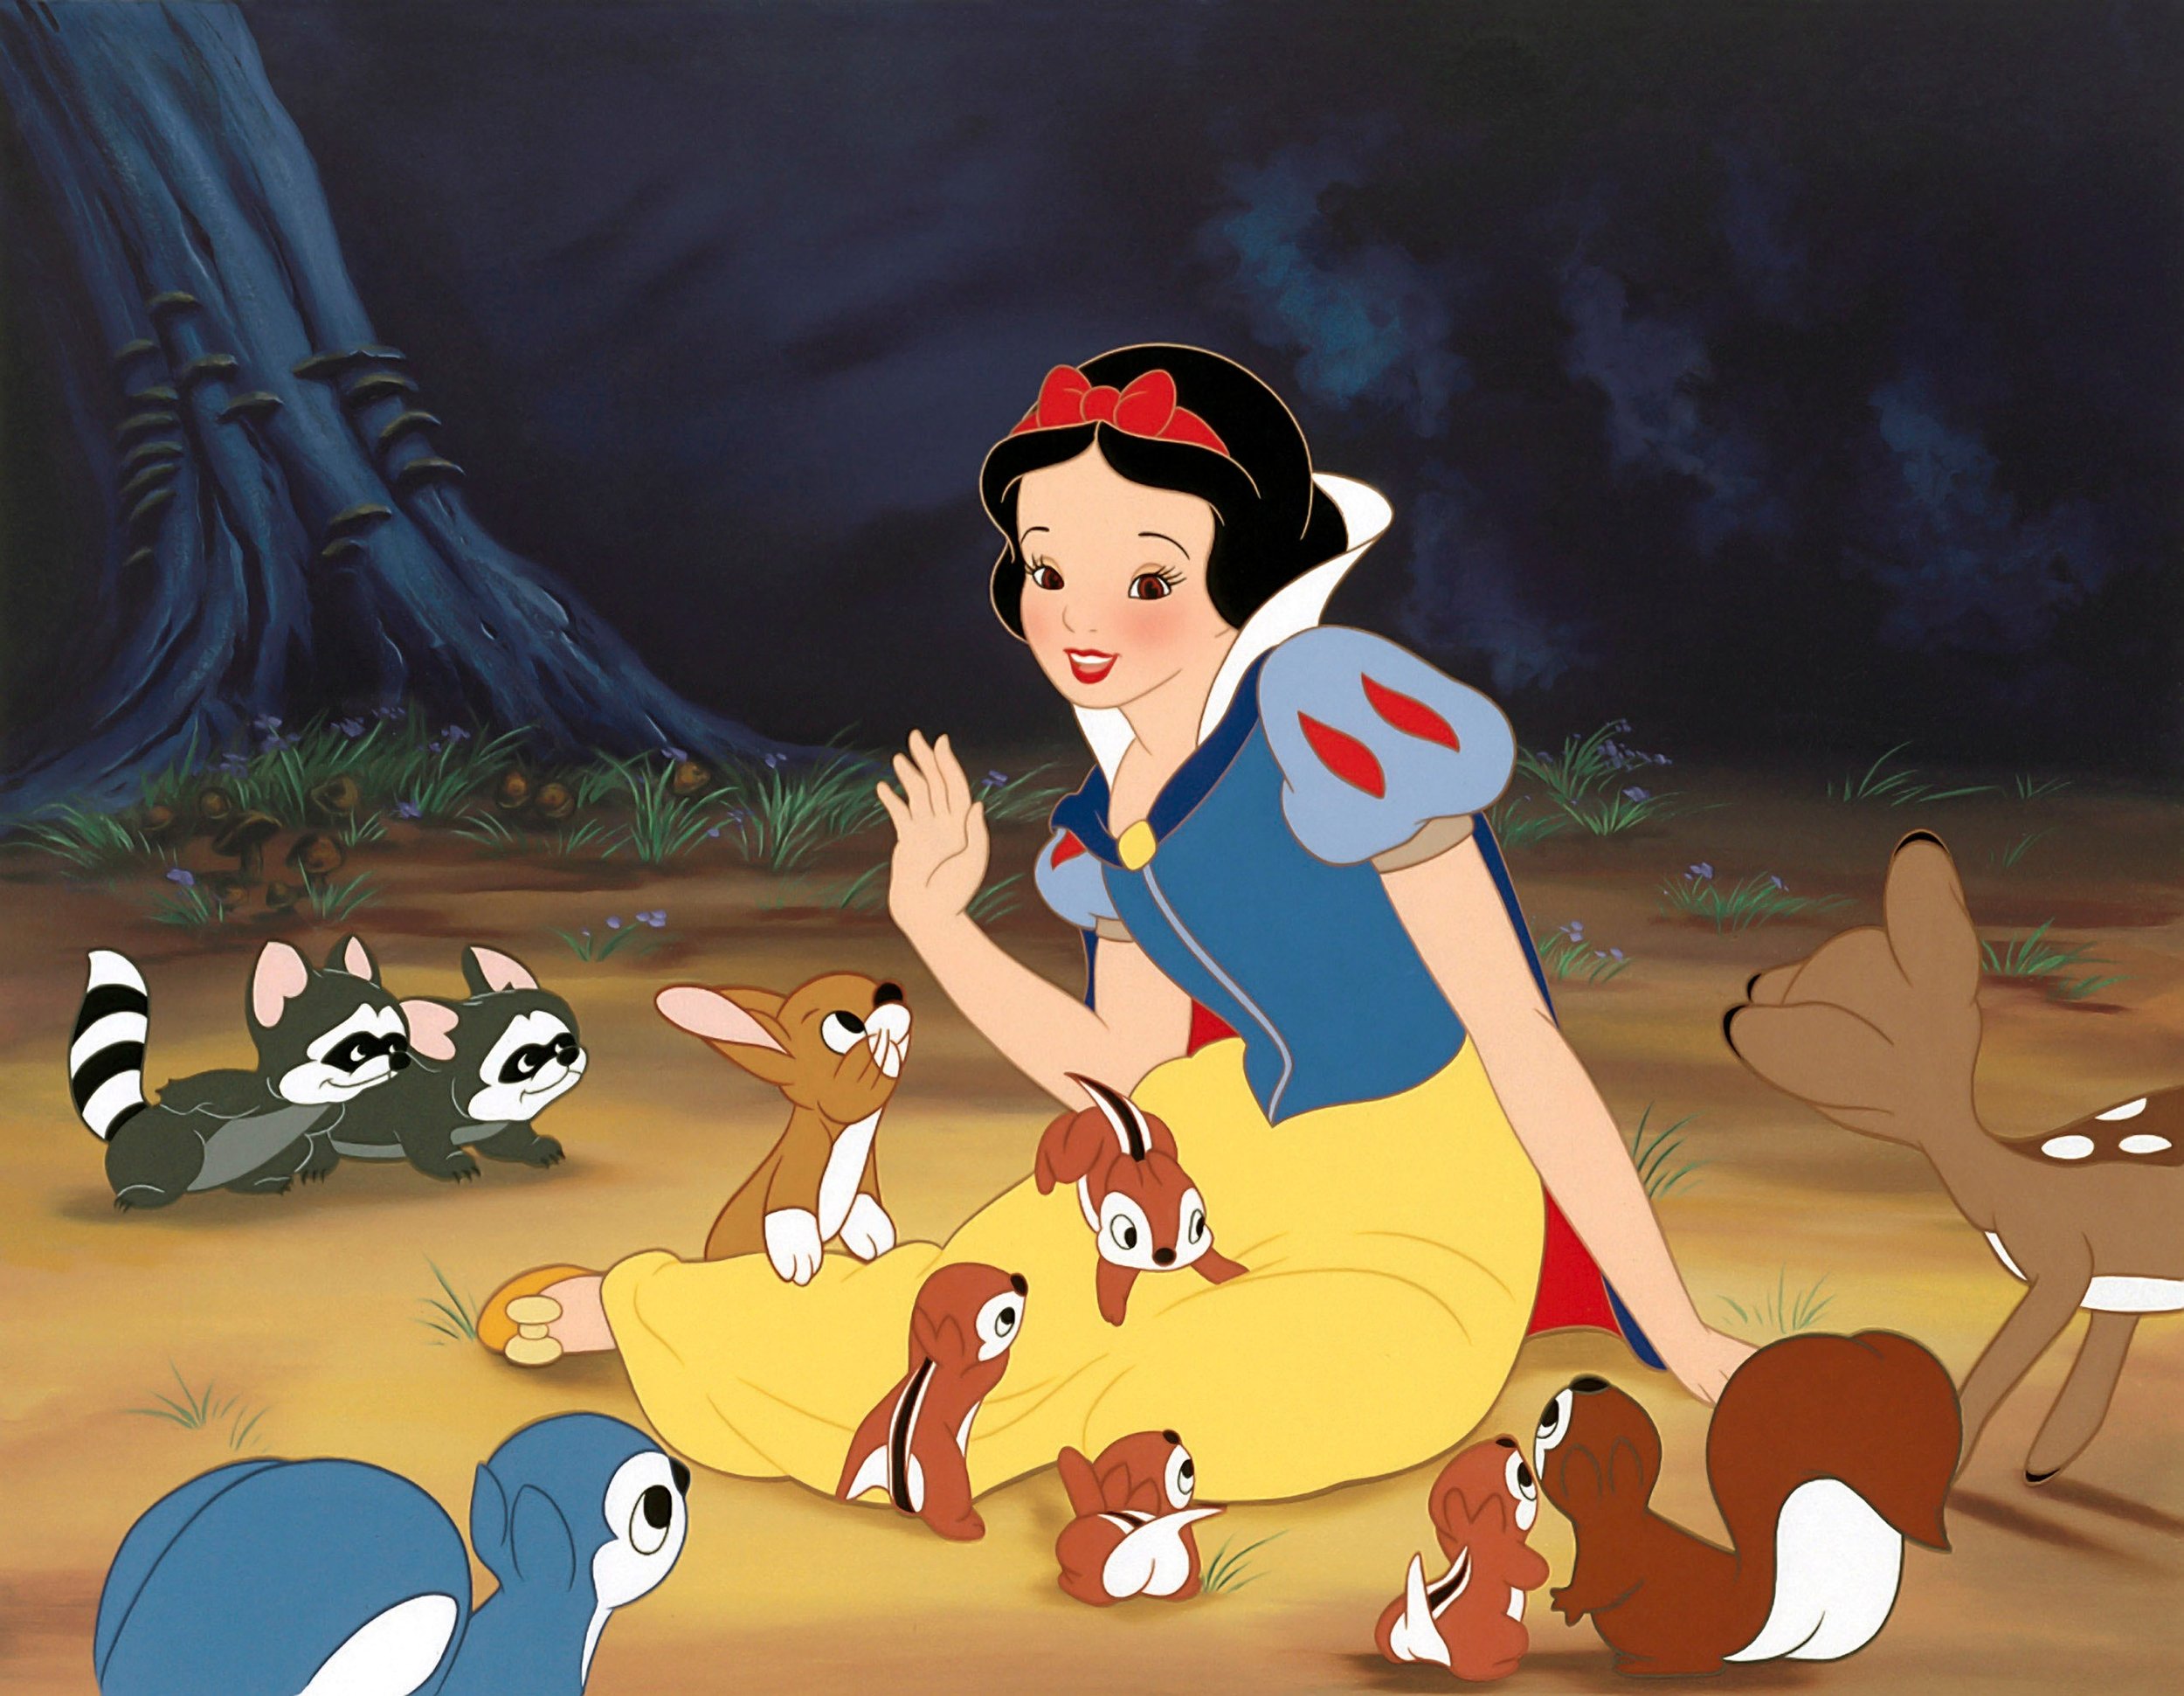 Snow White Wasn't the First Disney Princess | Smart News| Smithsonian  Magazine